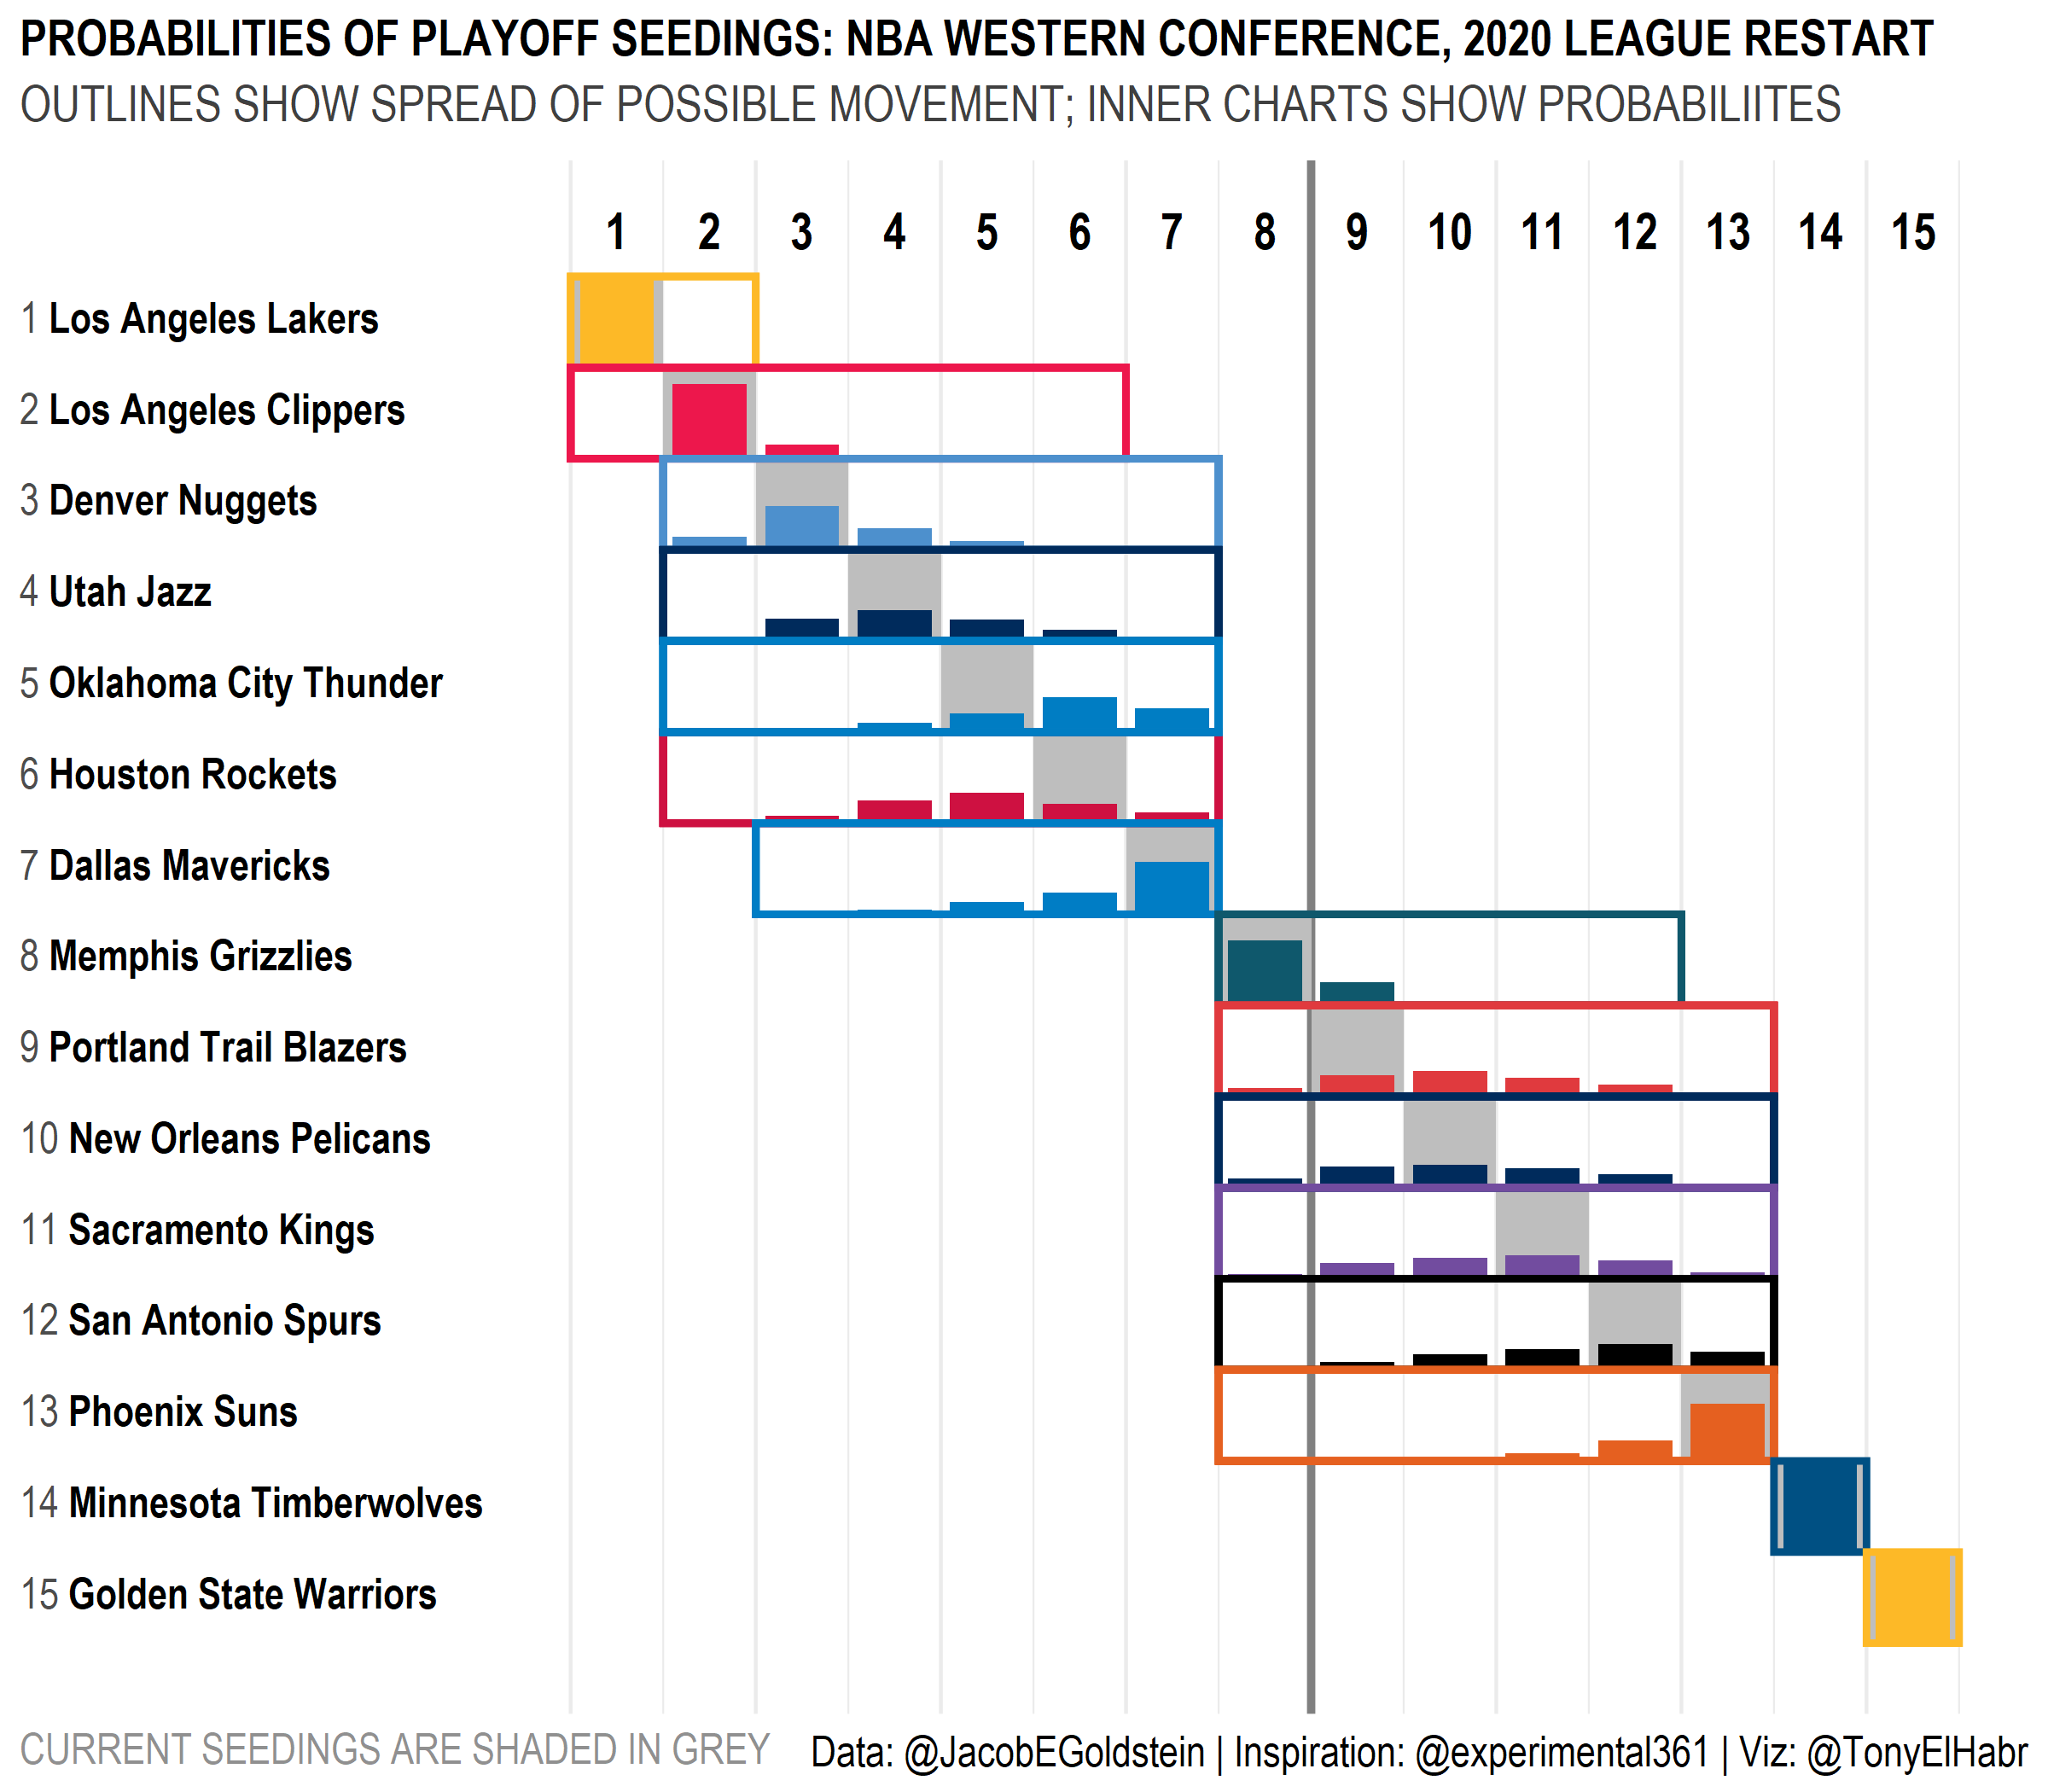 2020 NBA Western Conference League Restart Playoff Seeding Probabilities Bar Chart